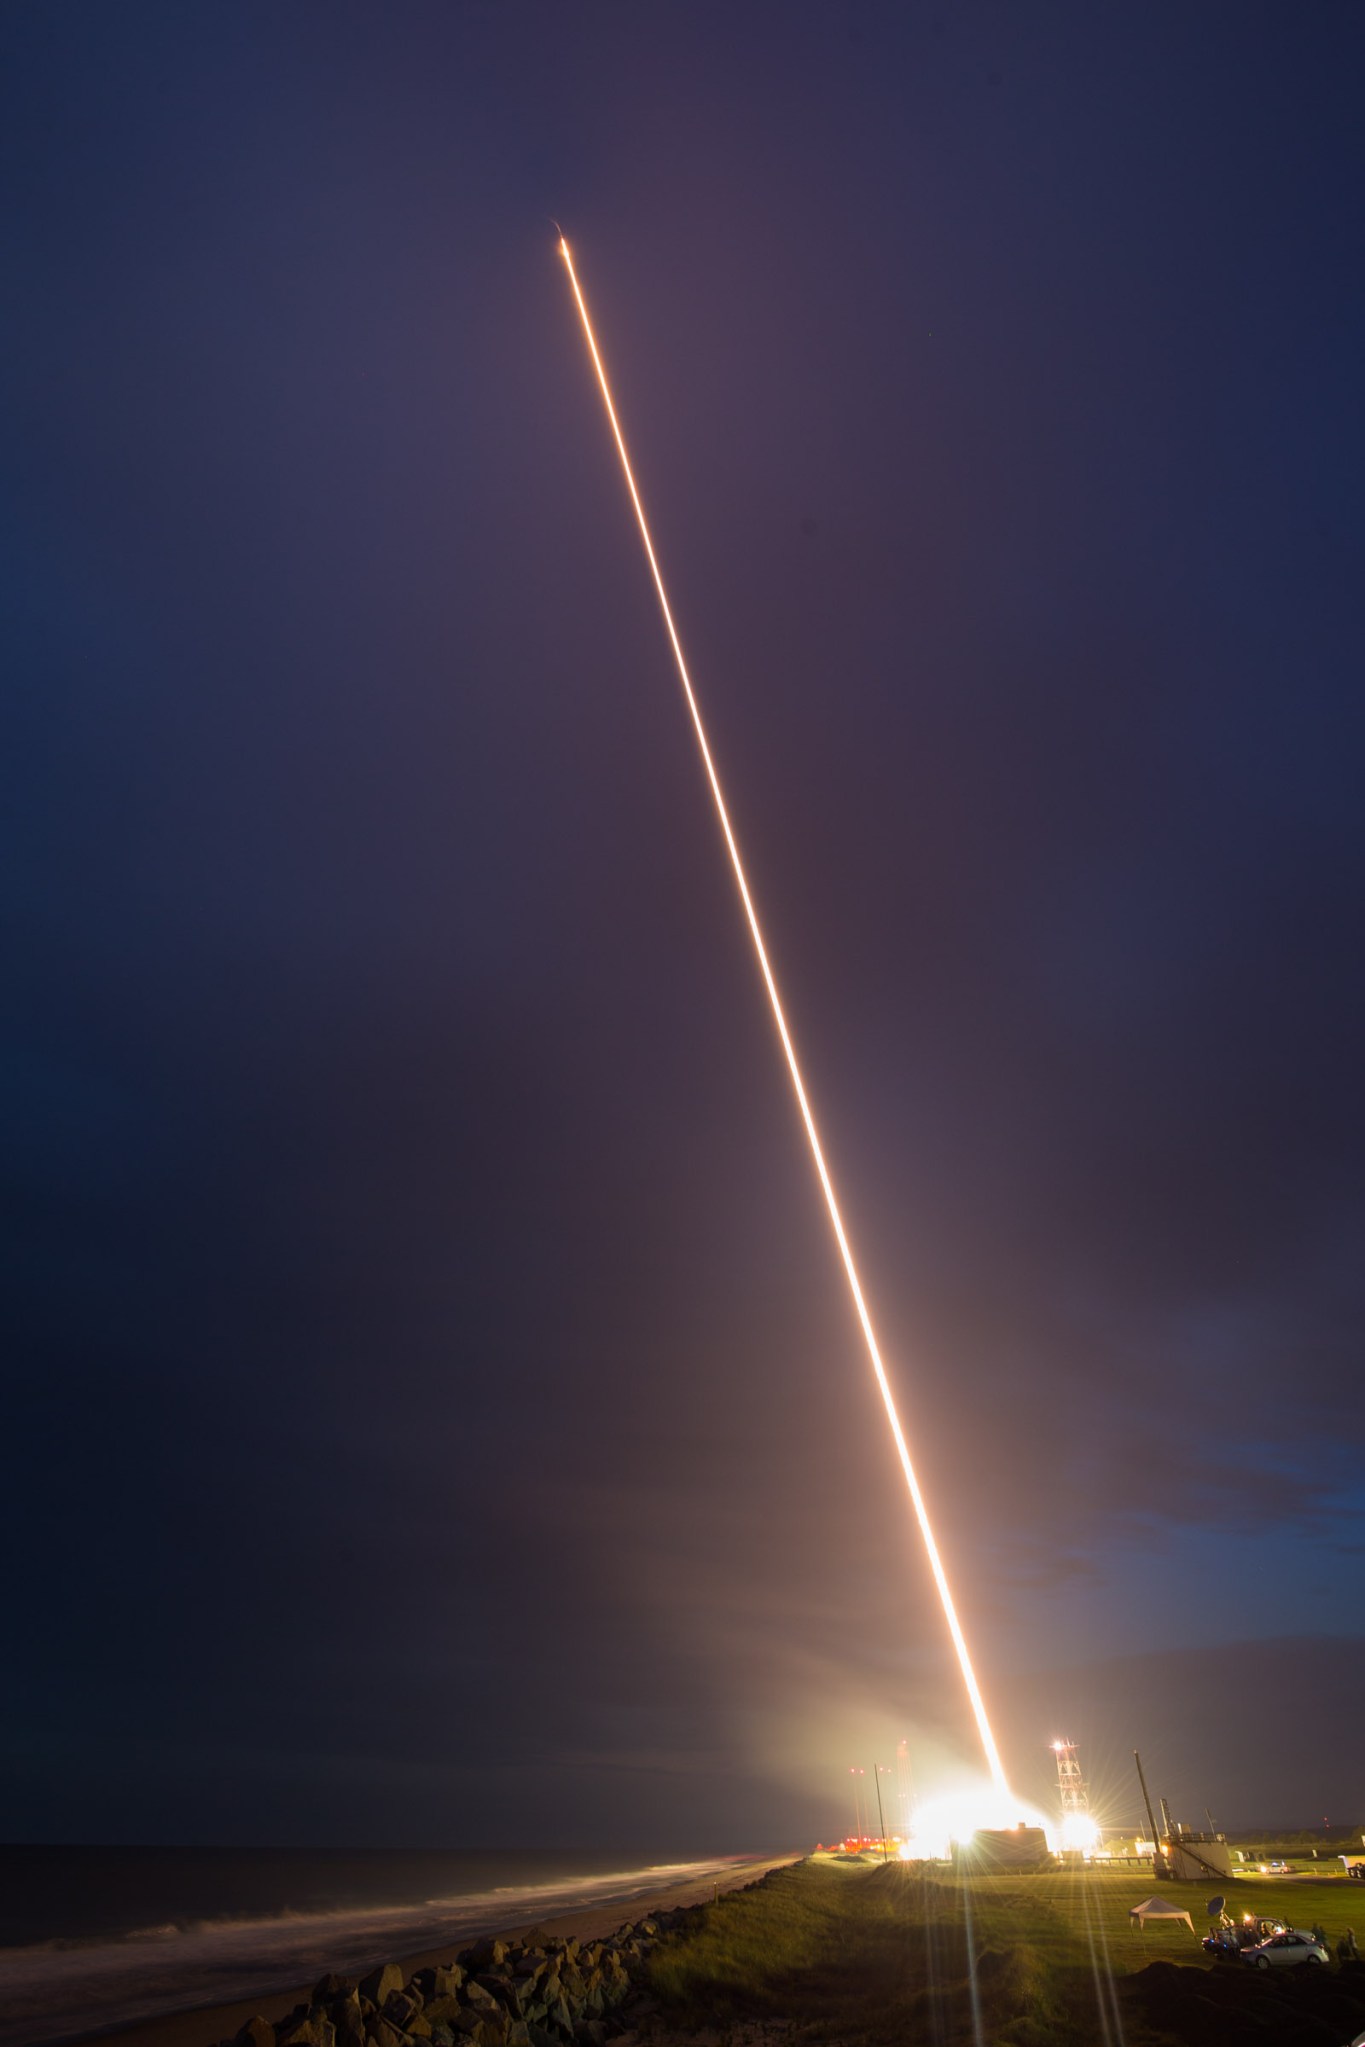 A long exposure photograph of a sounding rocket launch. A long, white streak represents the sounding rocket launching.